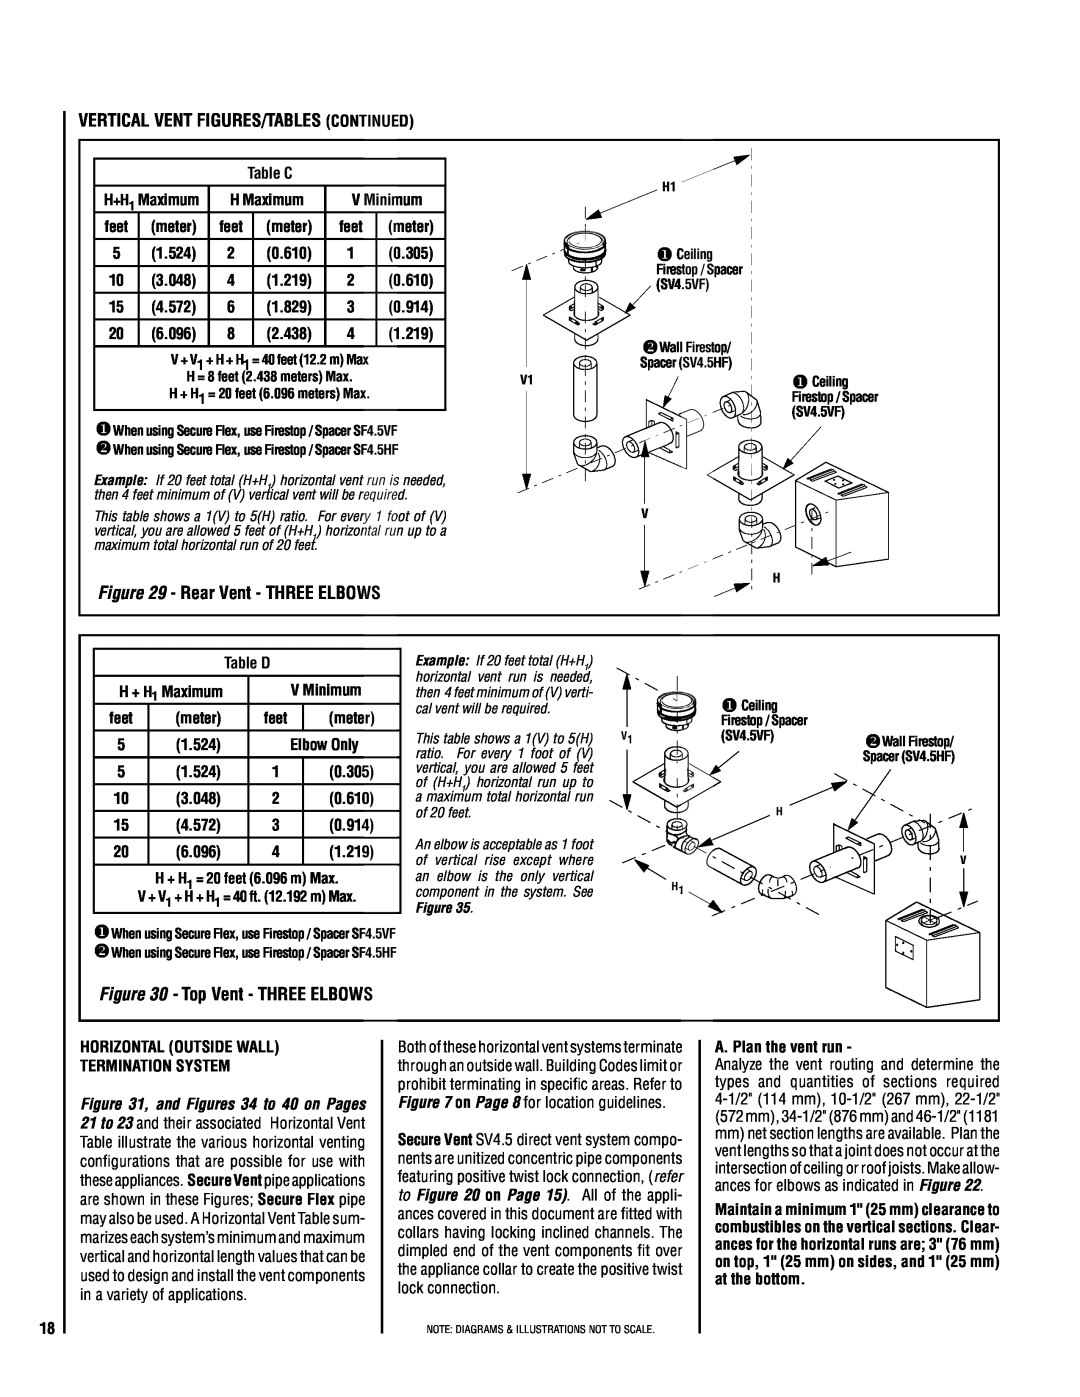 TOA Electronics SSDV-3328 Vertical Vent Figures/Tables Continued, Rear Vent - three elbows, Top Vent - three elbows 